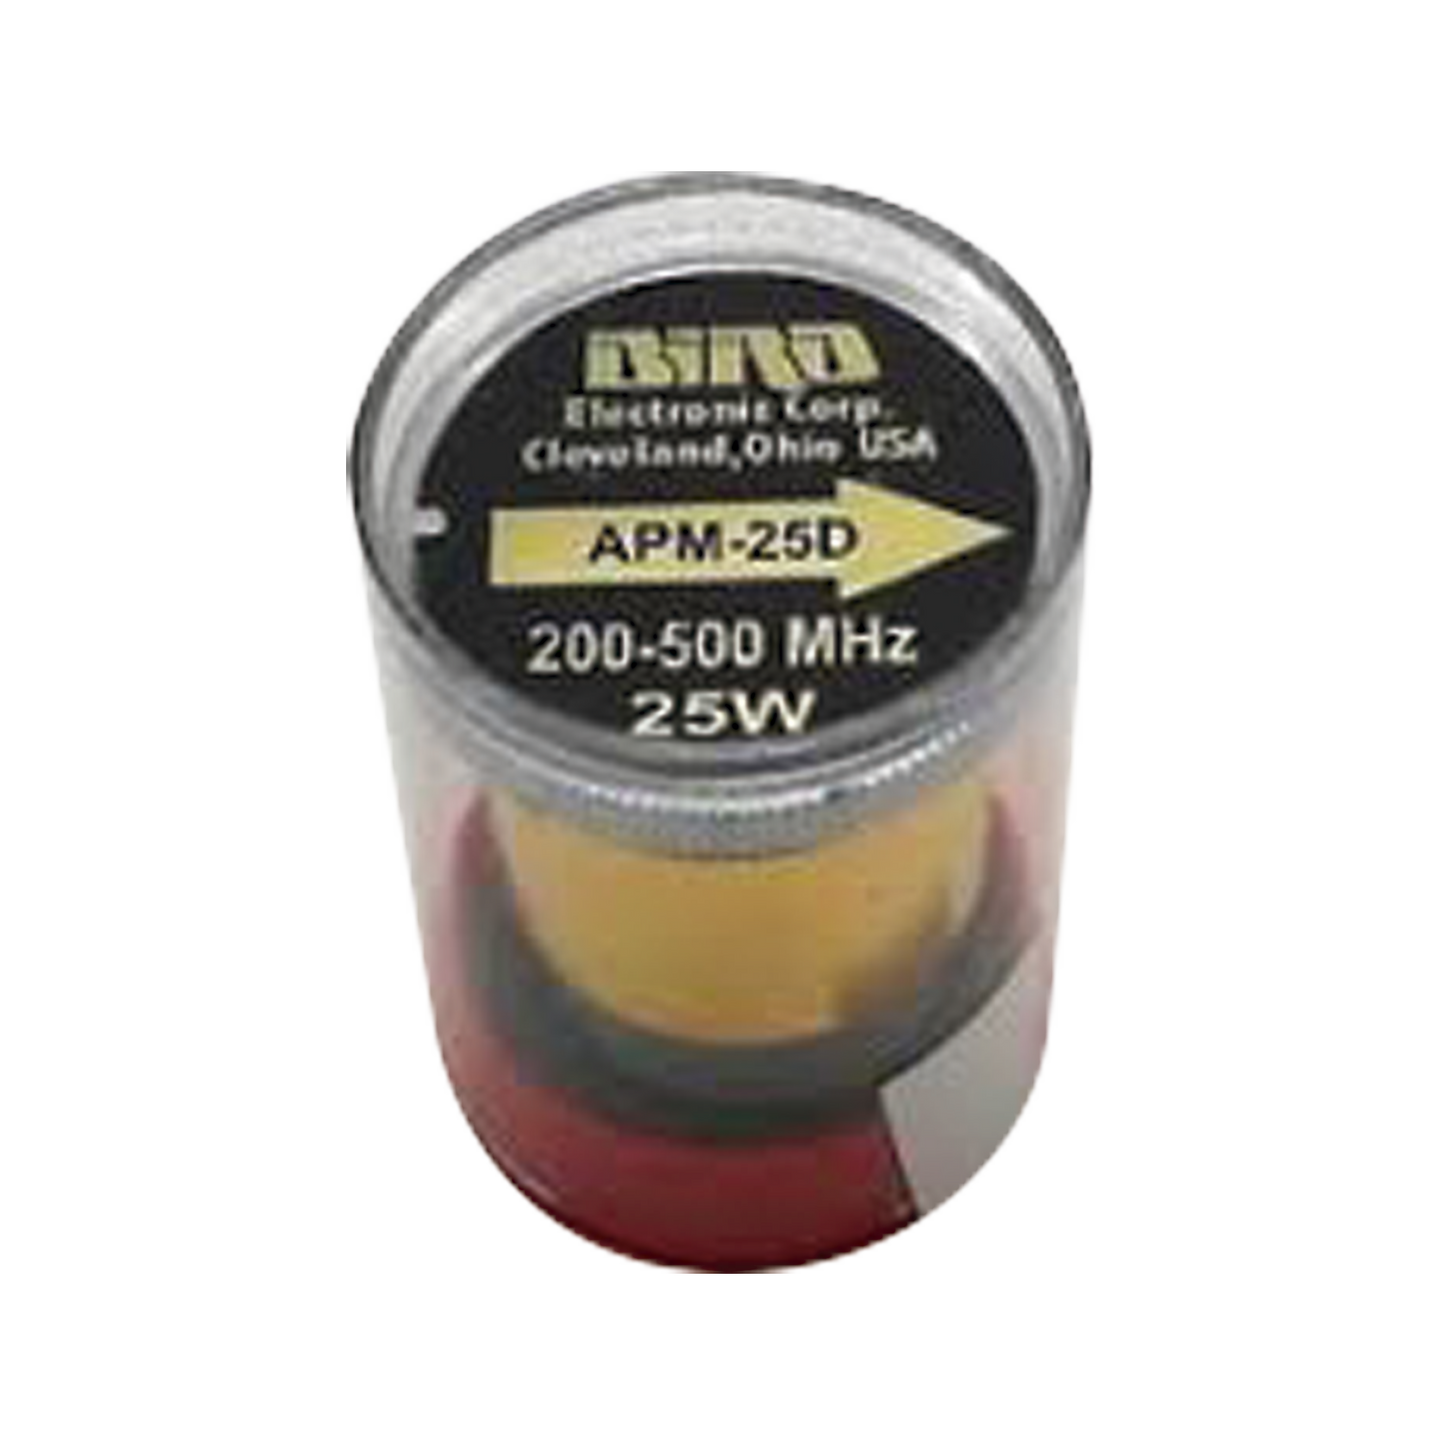 Elemento para Wattmetro BIRD APM-16, 200-500 MHz, 25 Watt.